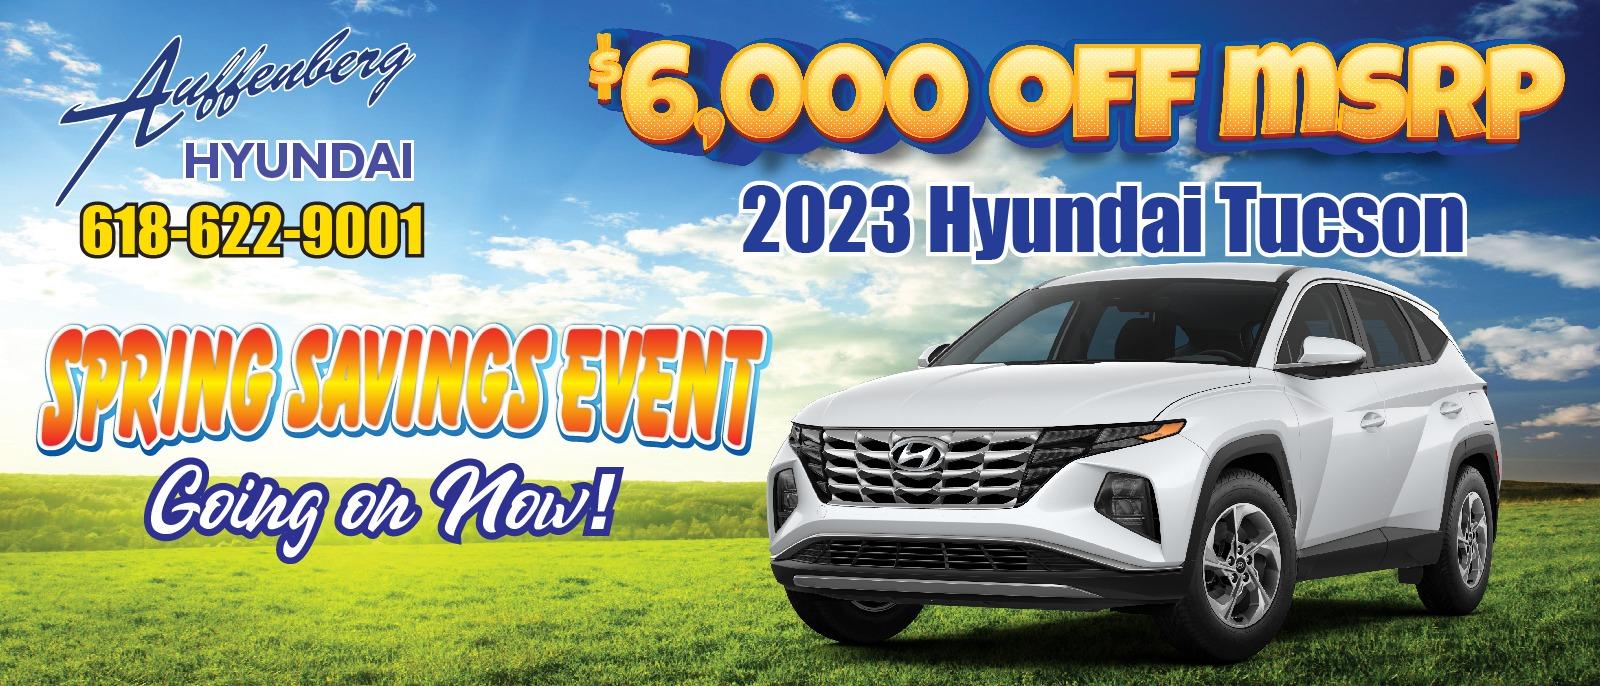 2023 Hyundai Tuscon
$6,000 off MSRP